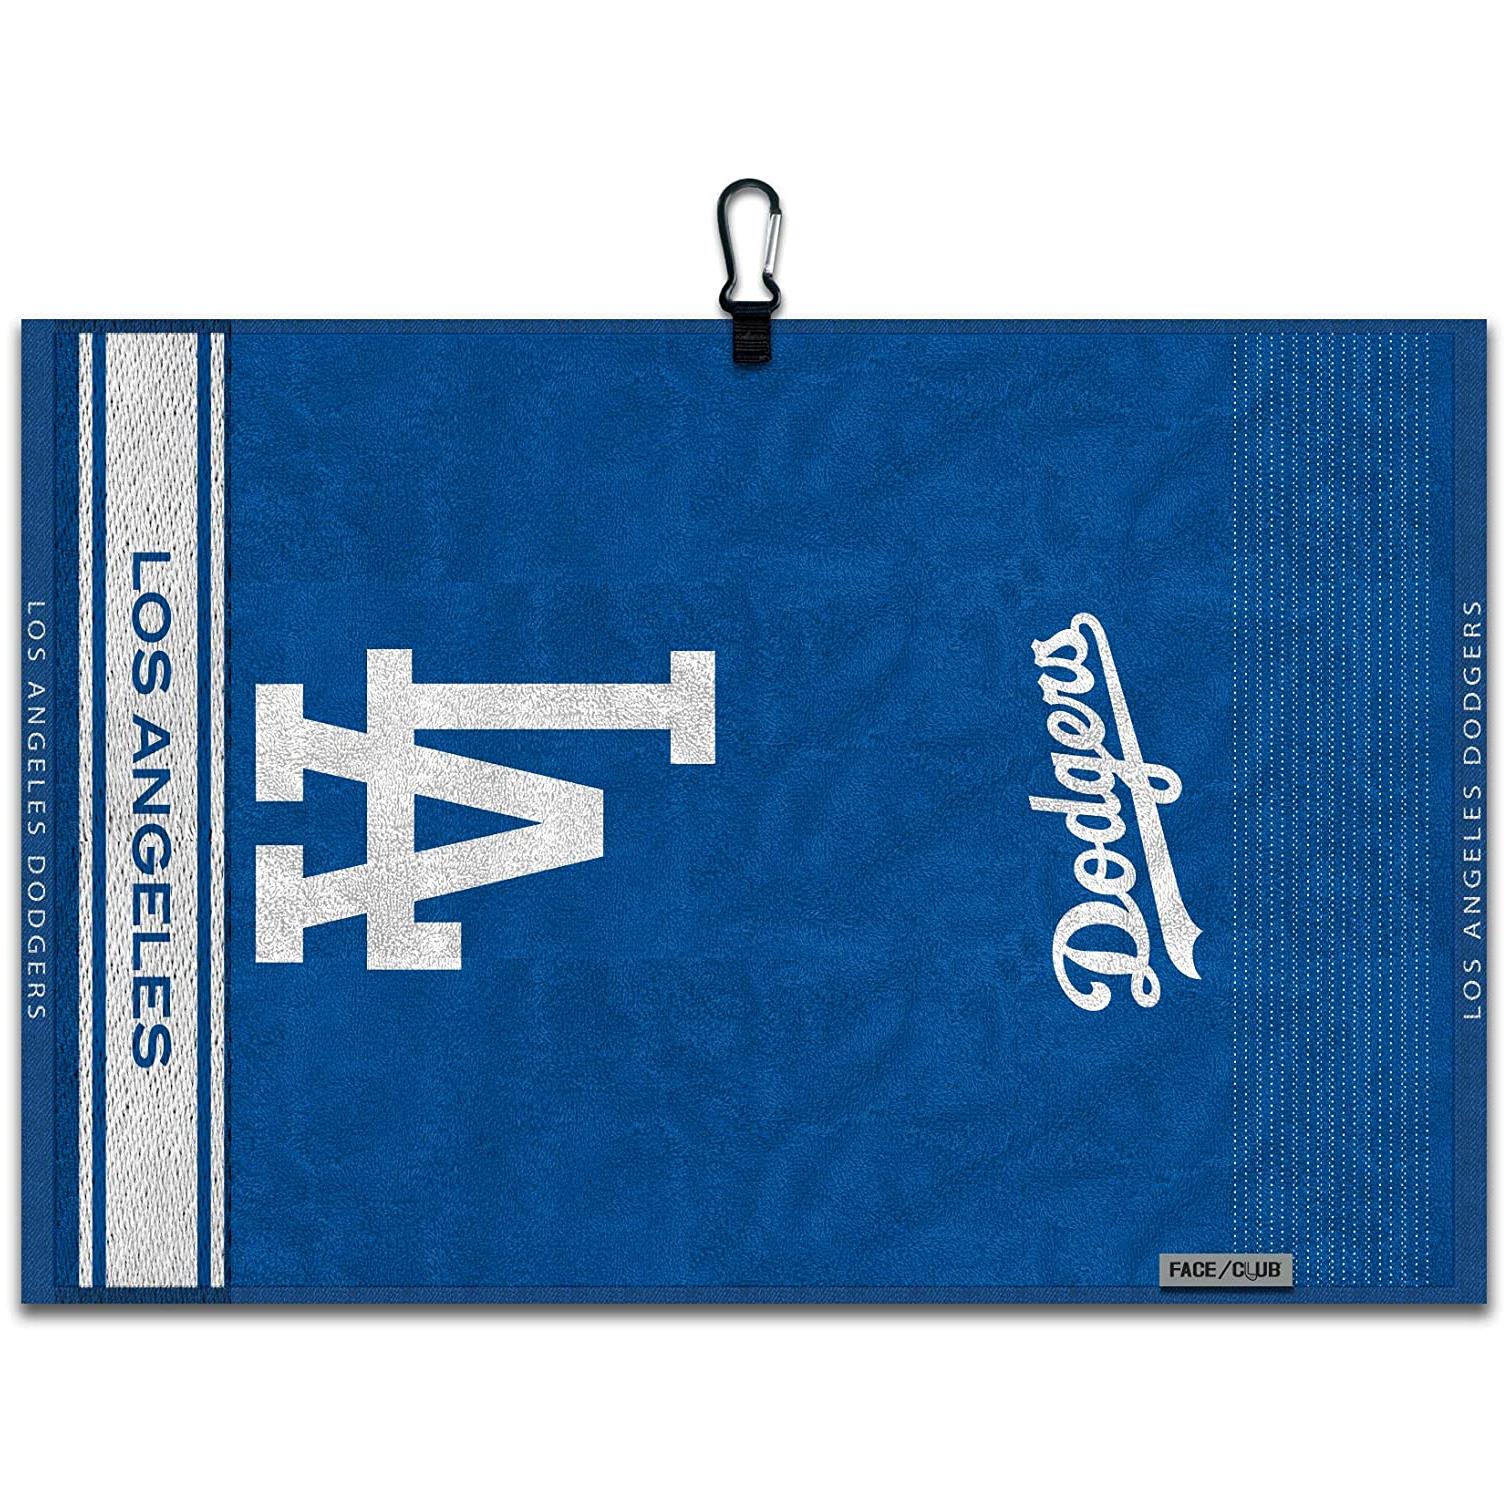 Team Effort Los Angeles Dodgers Face/Club Jacquard Golf Towel 00058